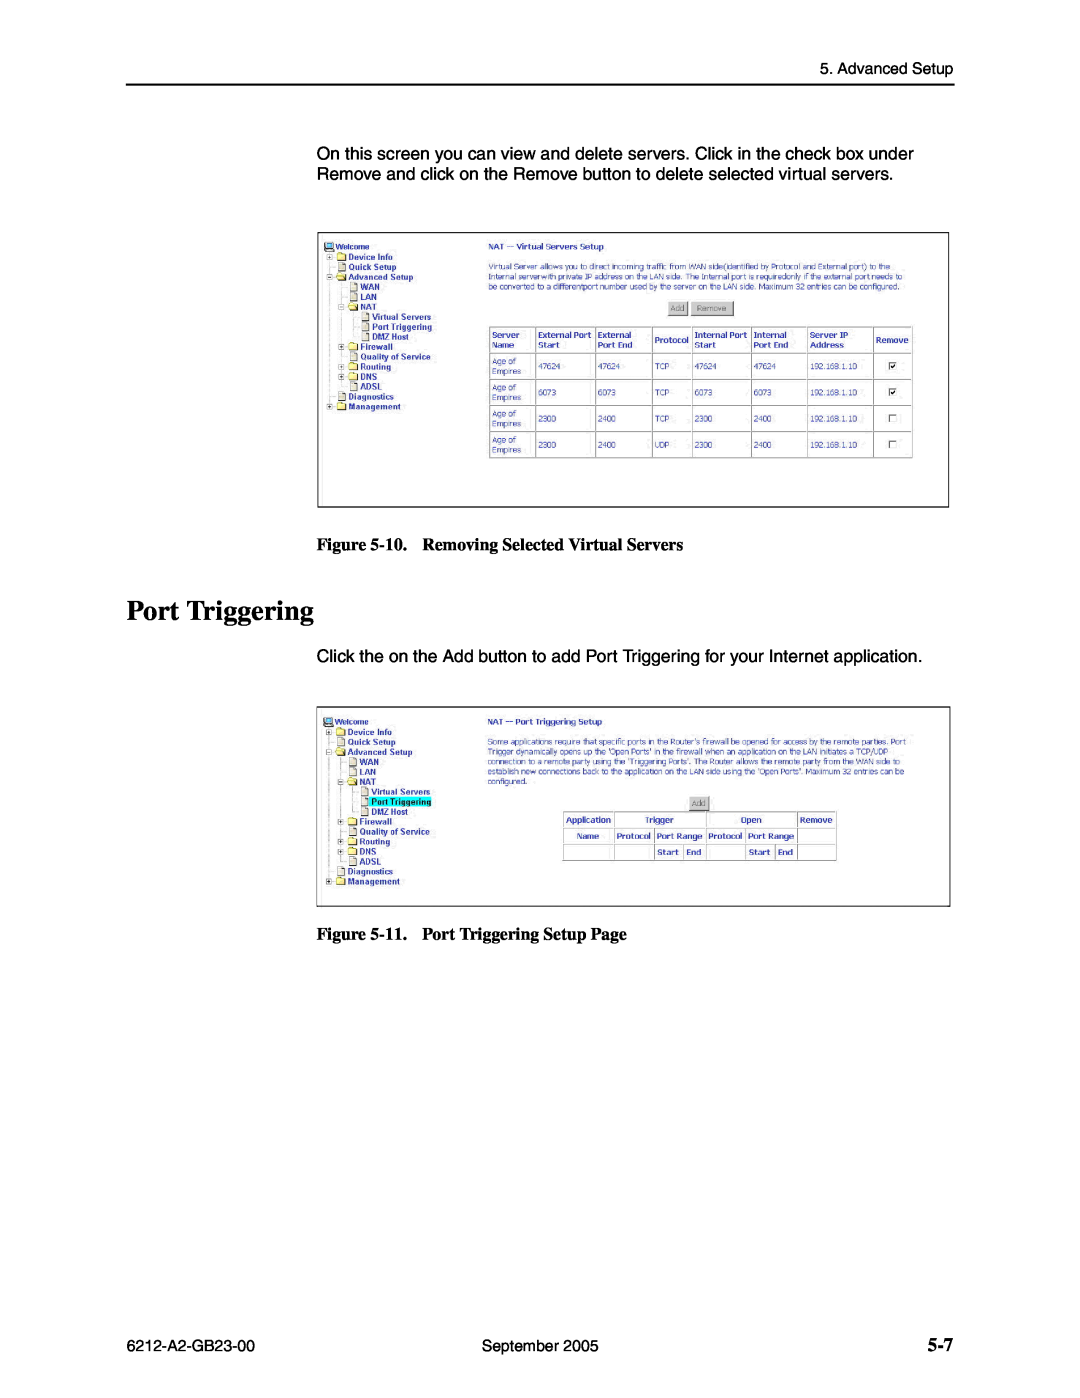 Paradyne 6212-I1 manual 10. Removing Selected Virtual Servers, 11. Port Triggering Setup Page 